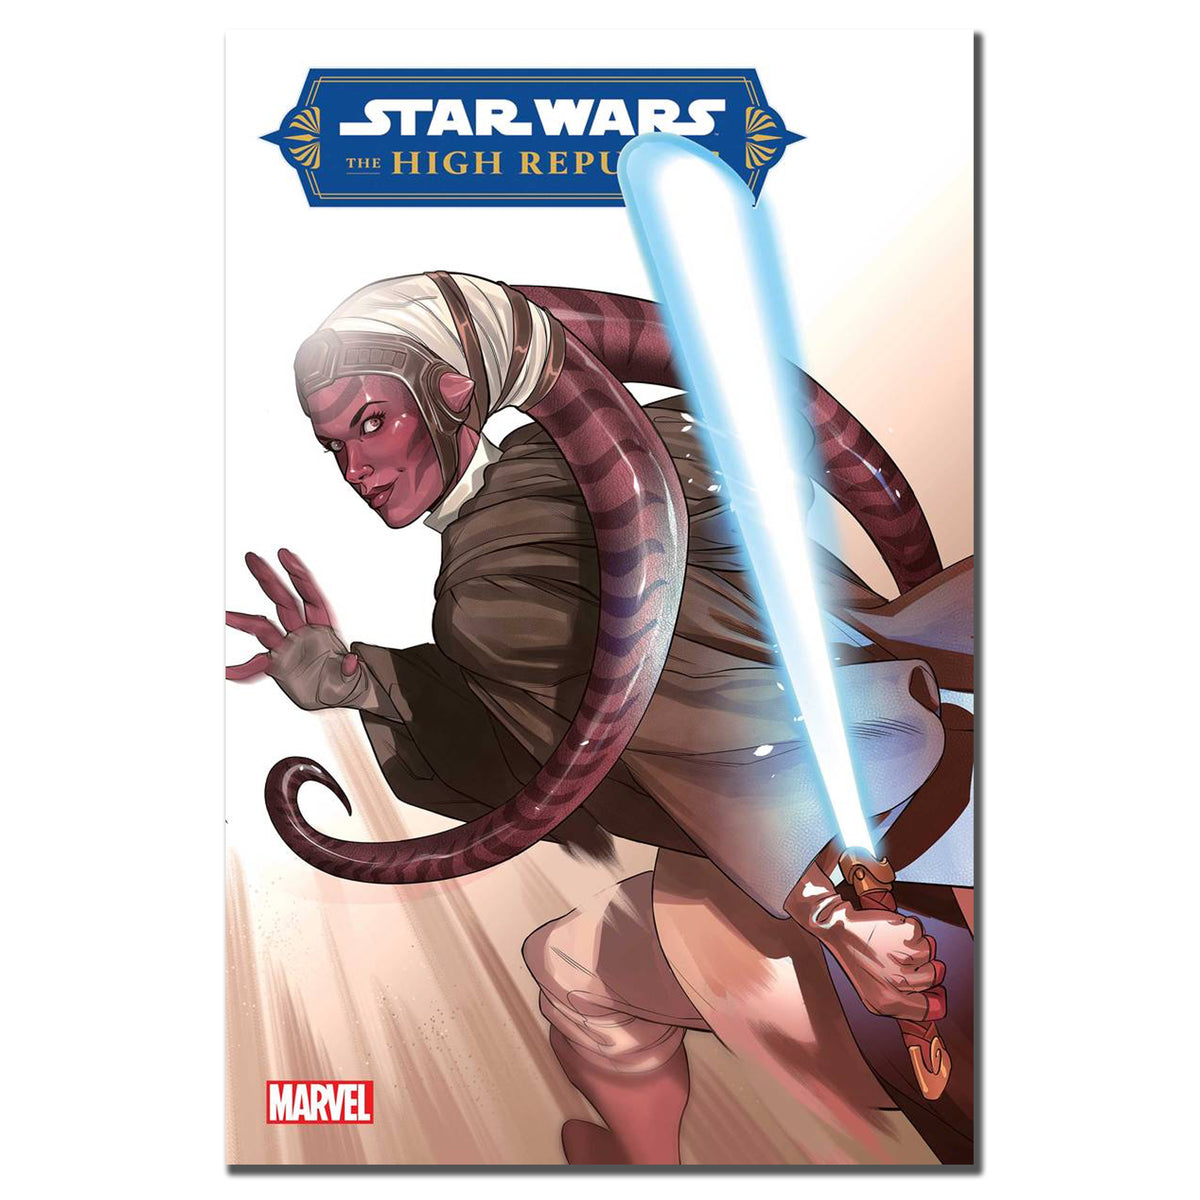 Star Wars The High Republic #2 Cover Variant SLOTT FINALSALE